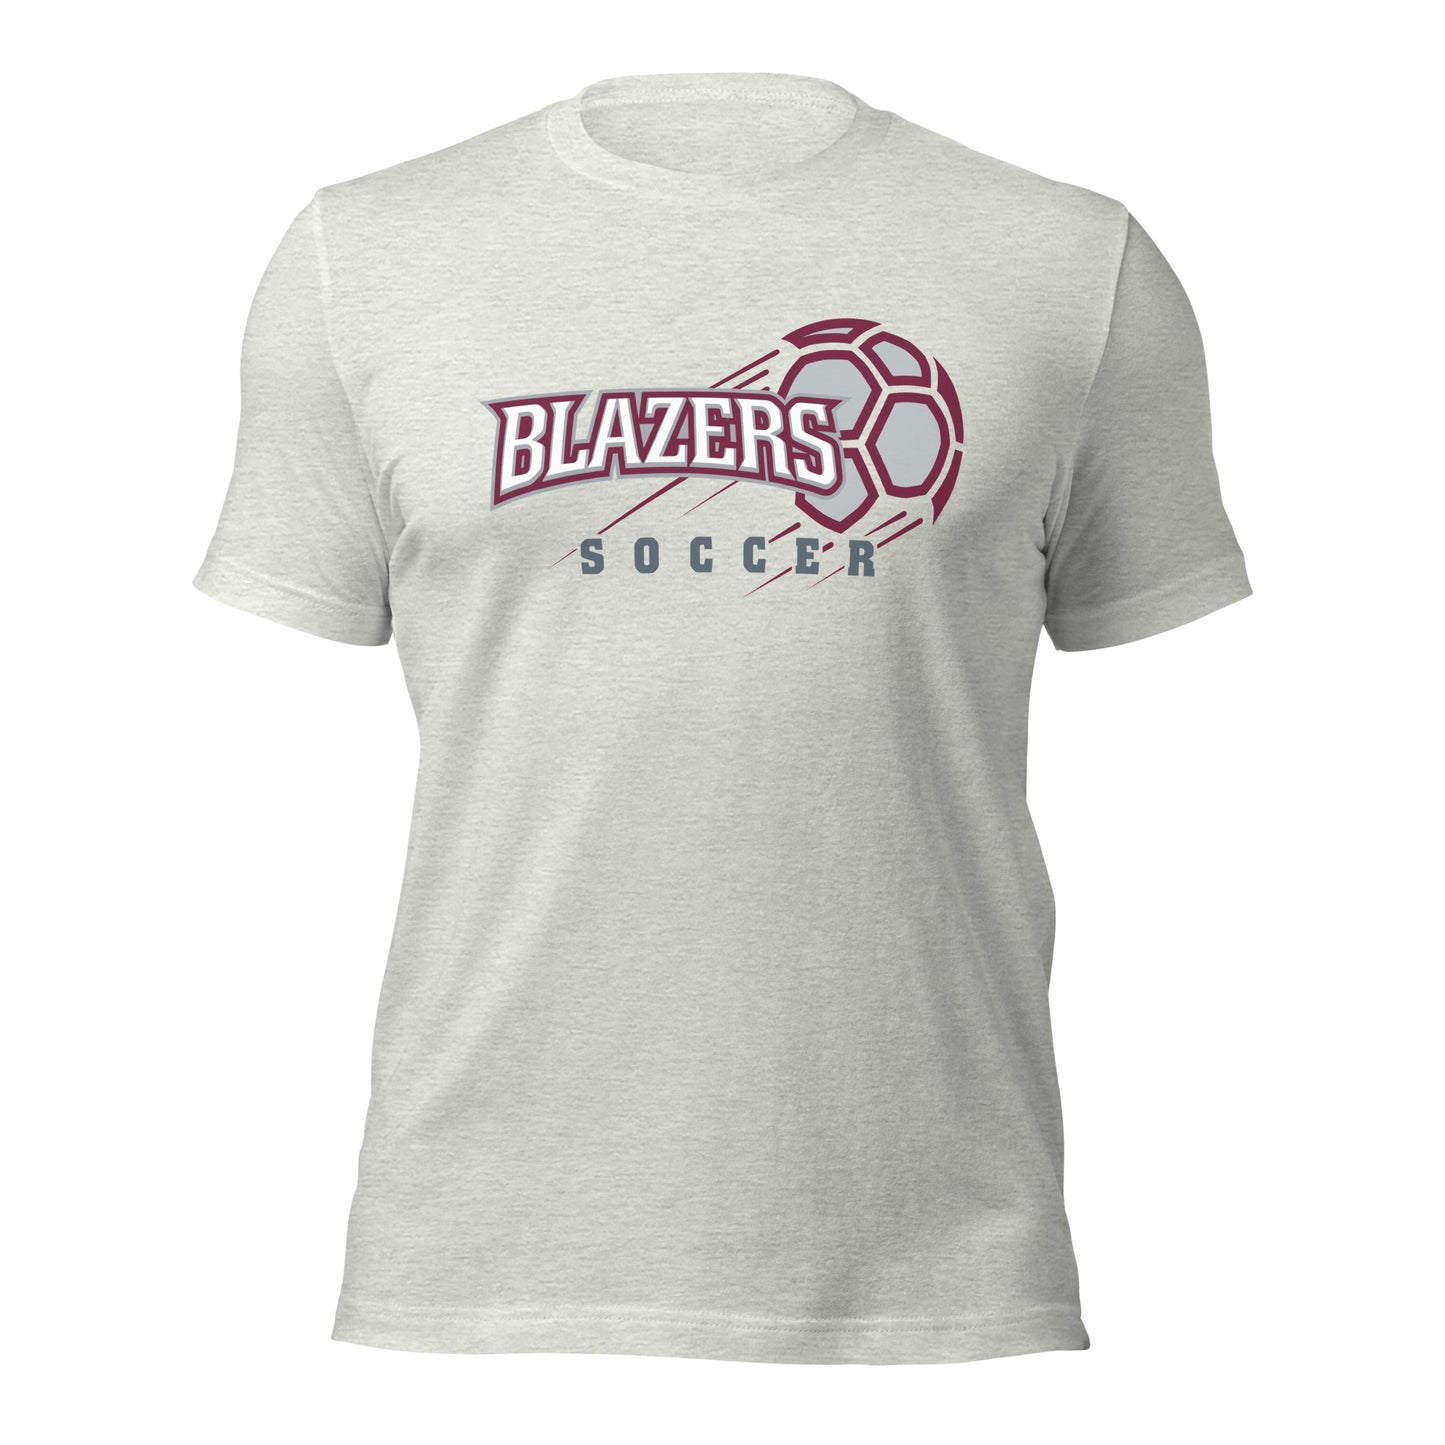 Blazers Soccer Unisex Short-Sleeve T-Shirt Light Colors